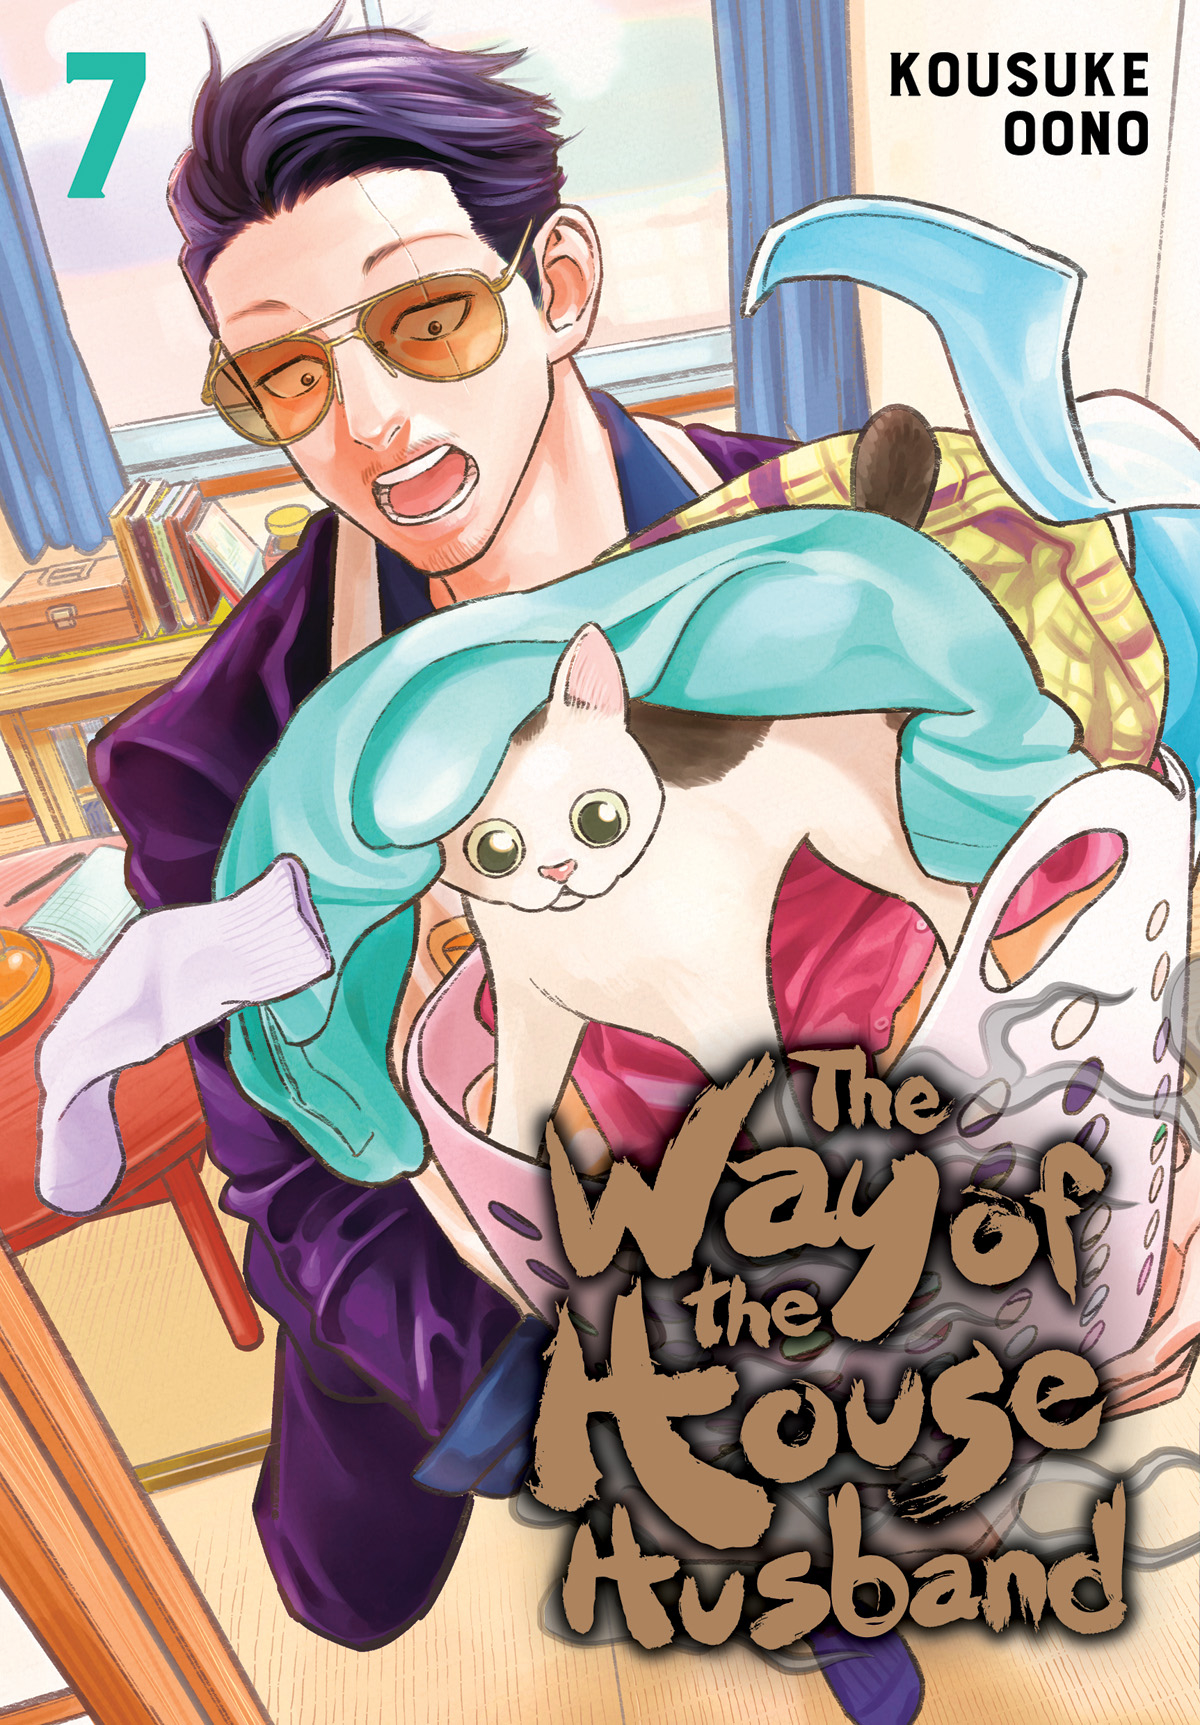 Way of the Househusband Manga Volume 7